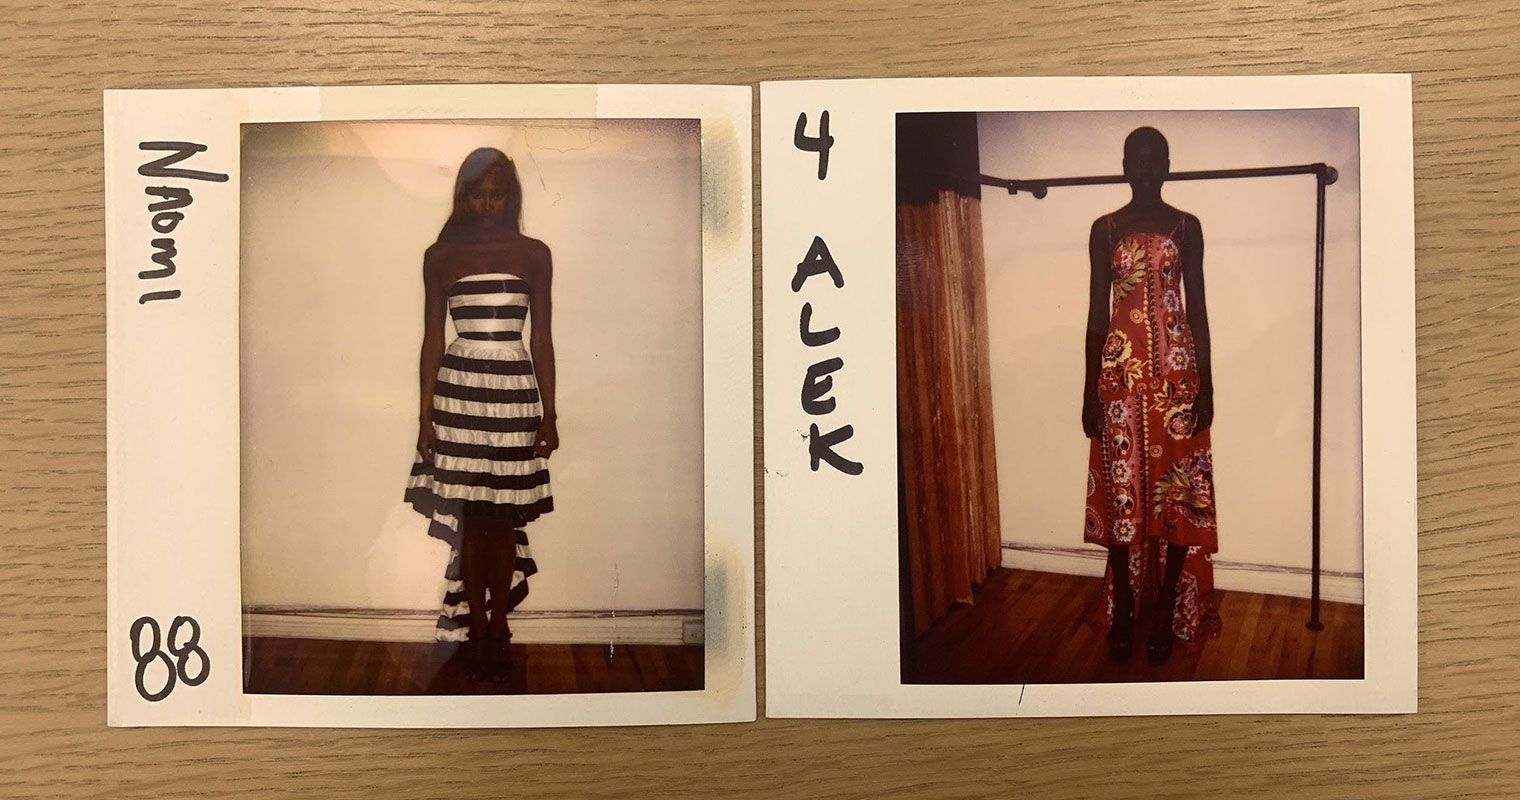 Two polaroid photos of Black women wearing designer dresses